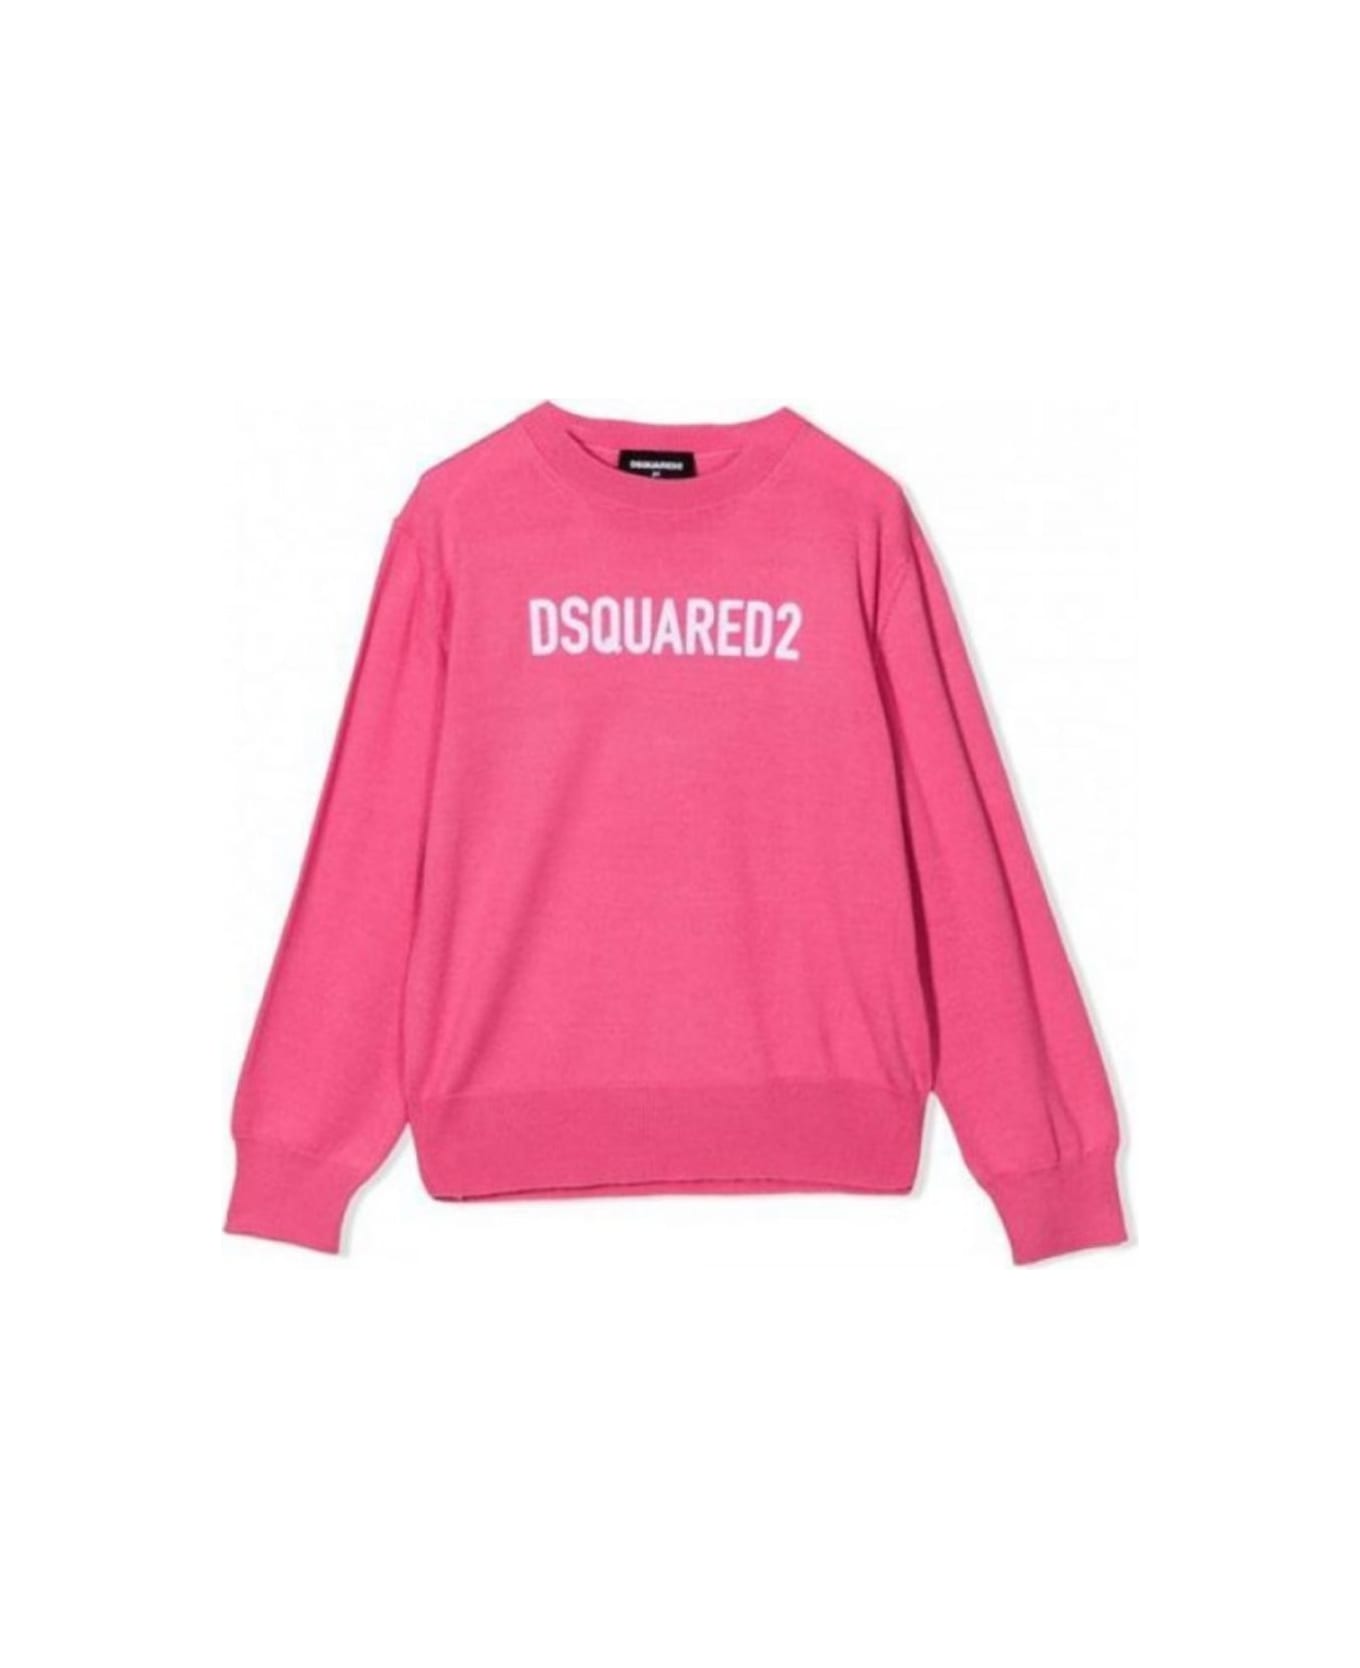 Dsquared2 D2k148u Sweater - Pink